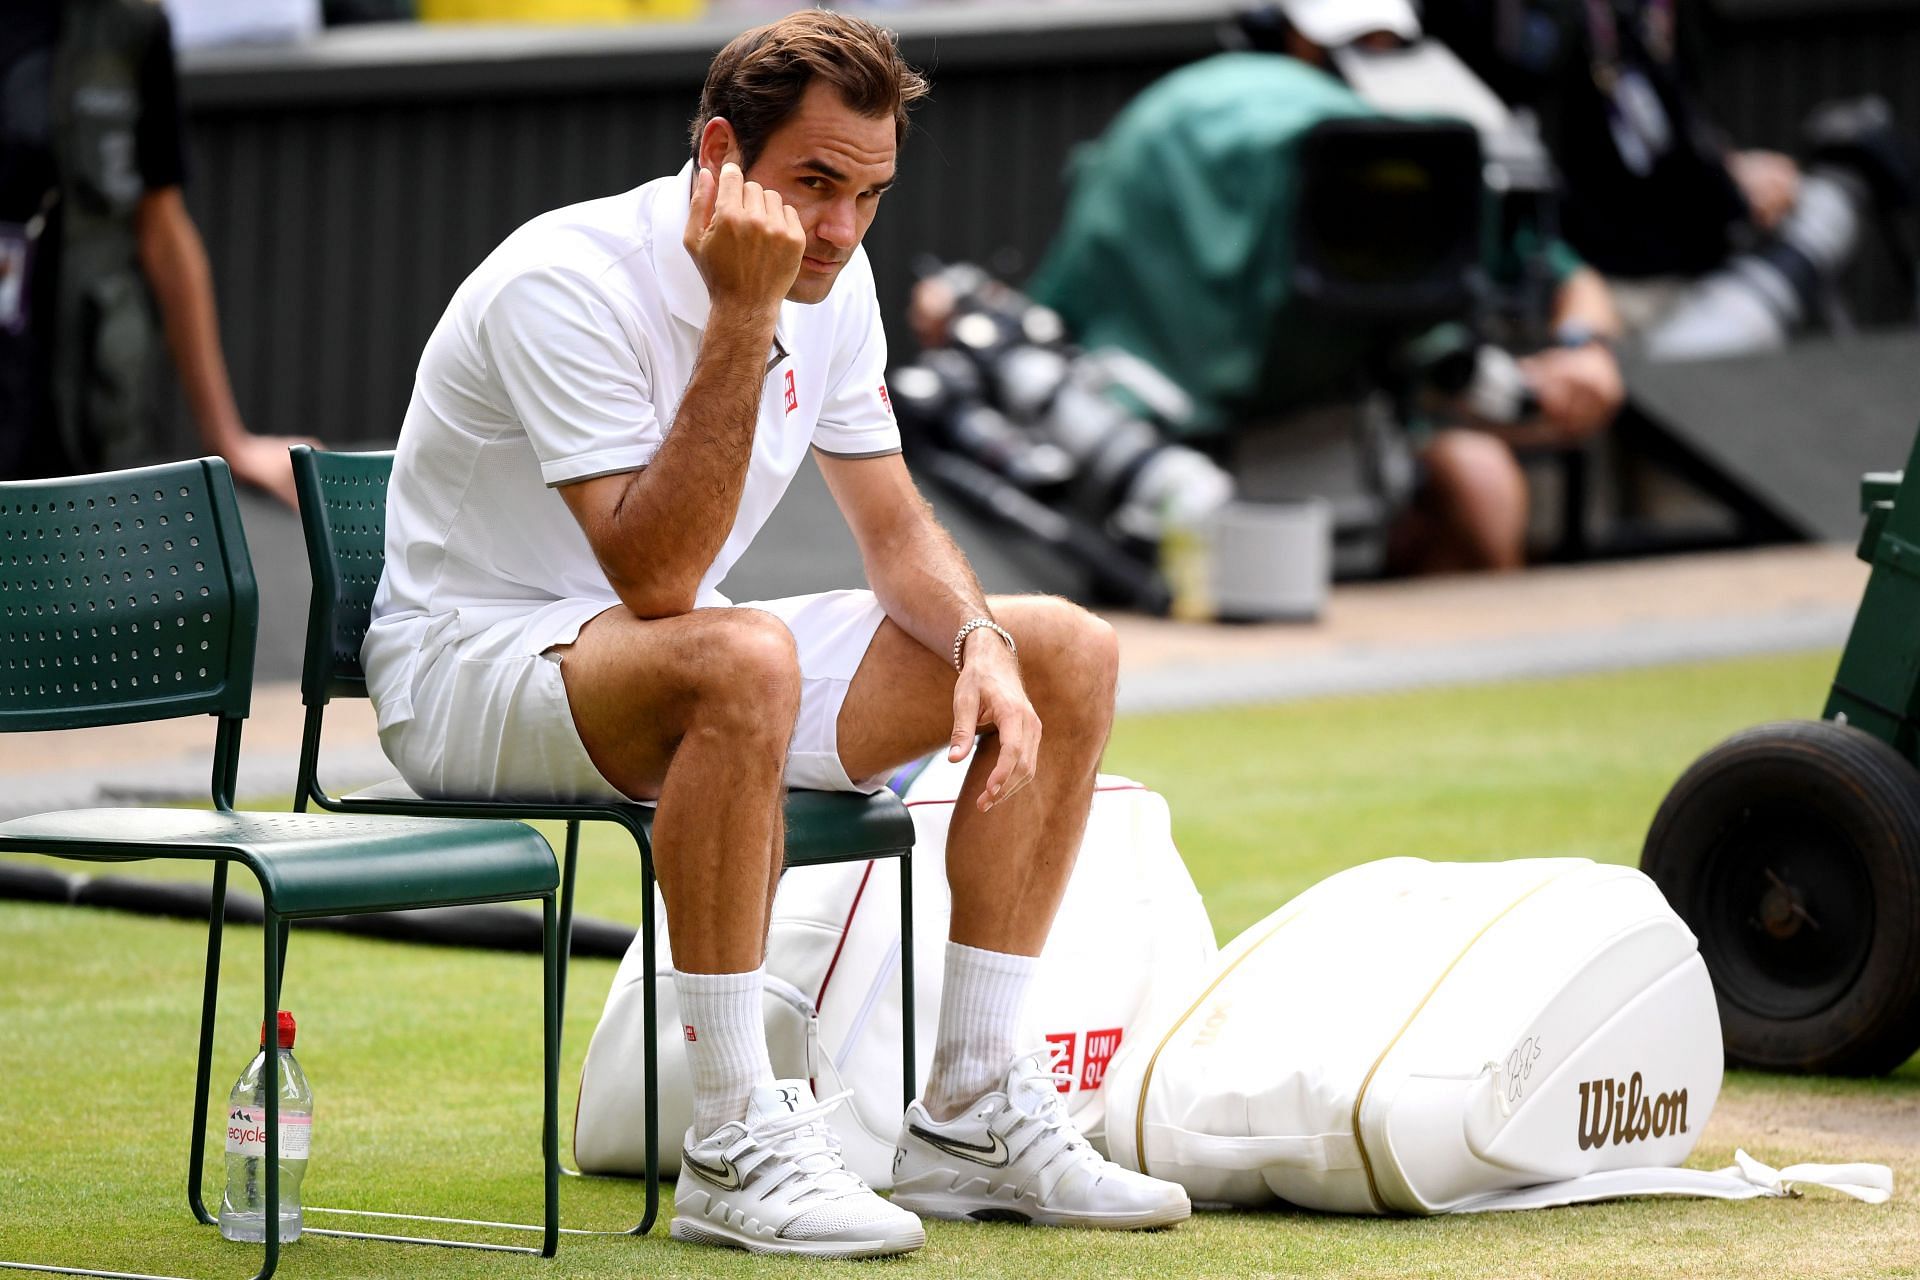 Federer at 2019 Wimbledon against Novak Djokovic